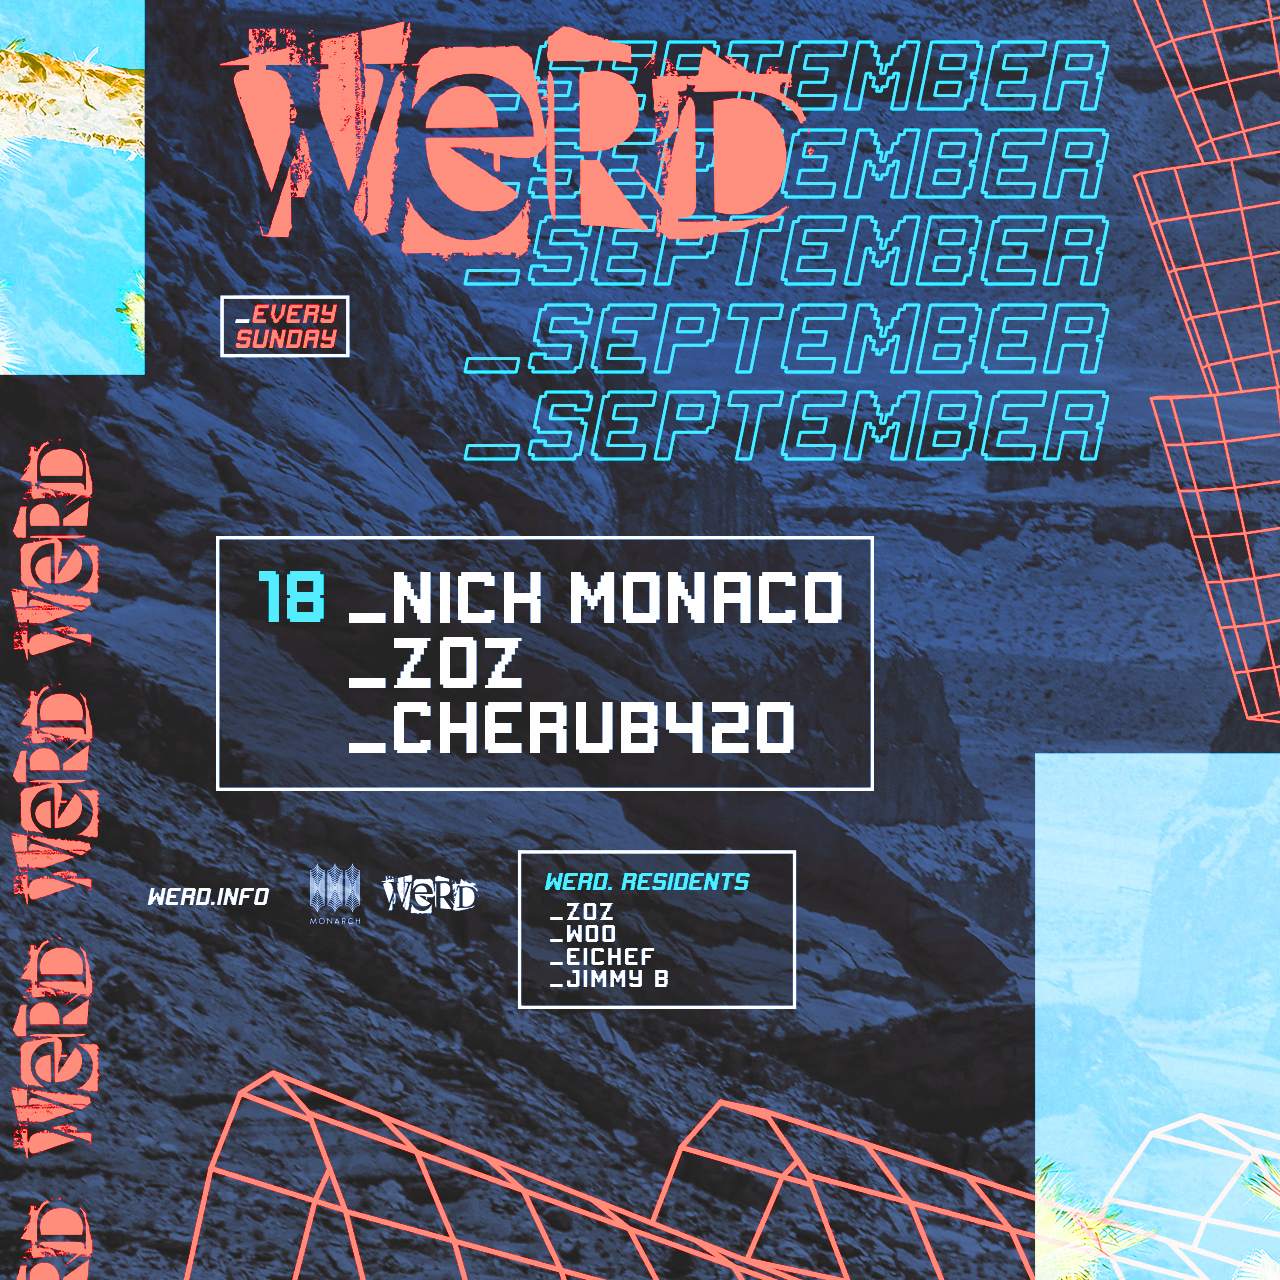 WERD. with Nick Monaco, Zoz, Cherub420 - Página trasera